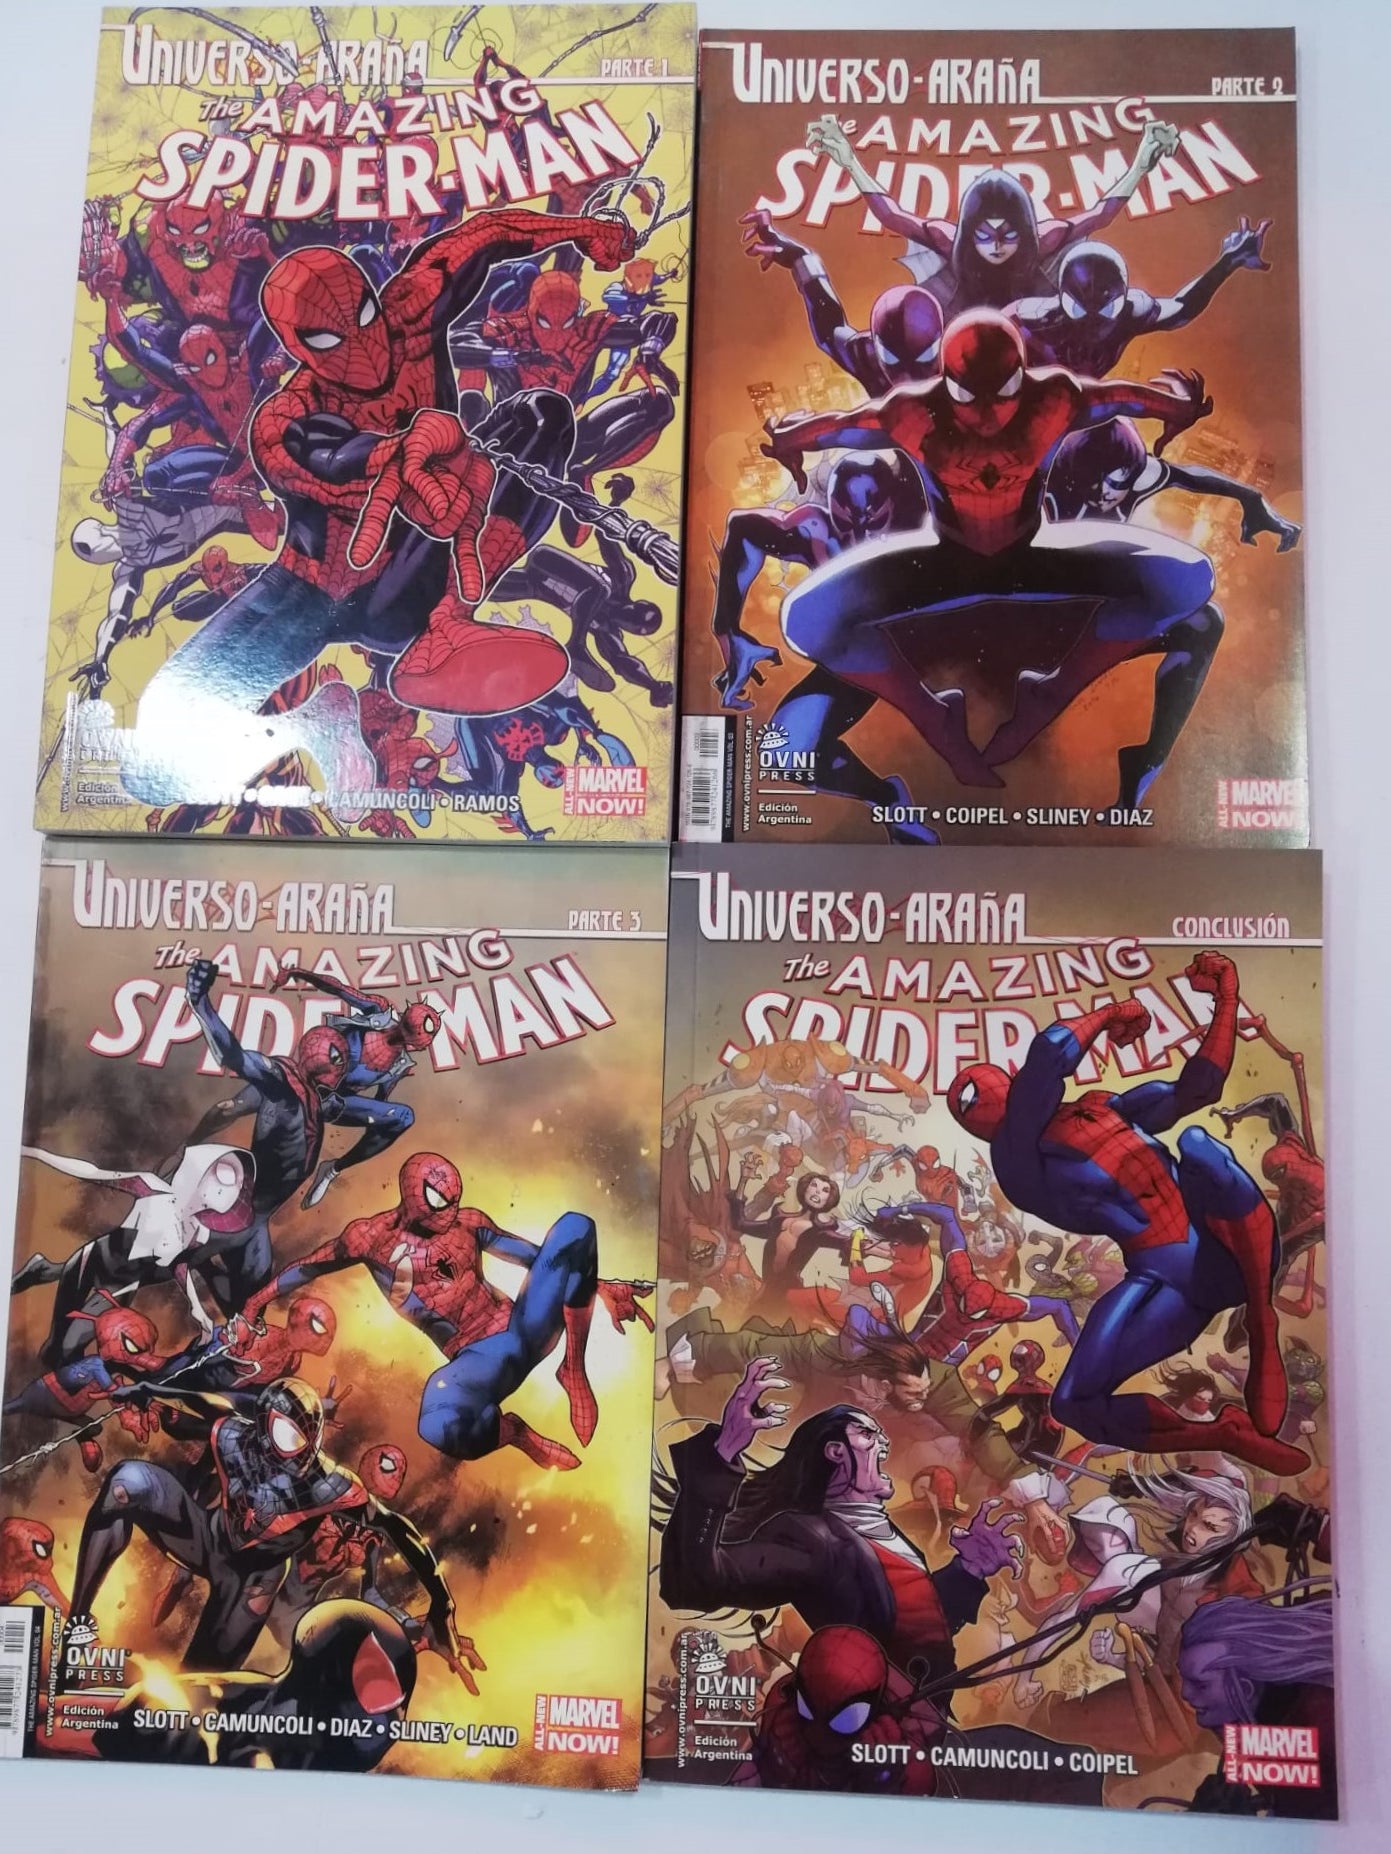 The Amazing Spider-Man: Universo Araña Pack Historia Completa (Parte 1 a Conclusión) OVNI Press ENcuadrocomics